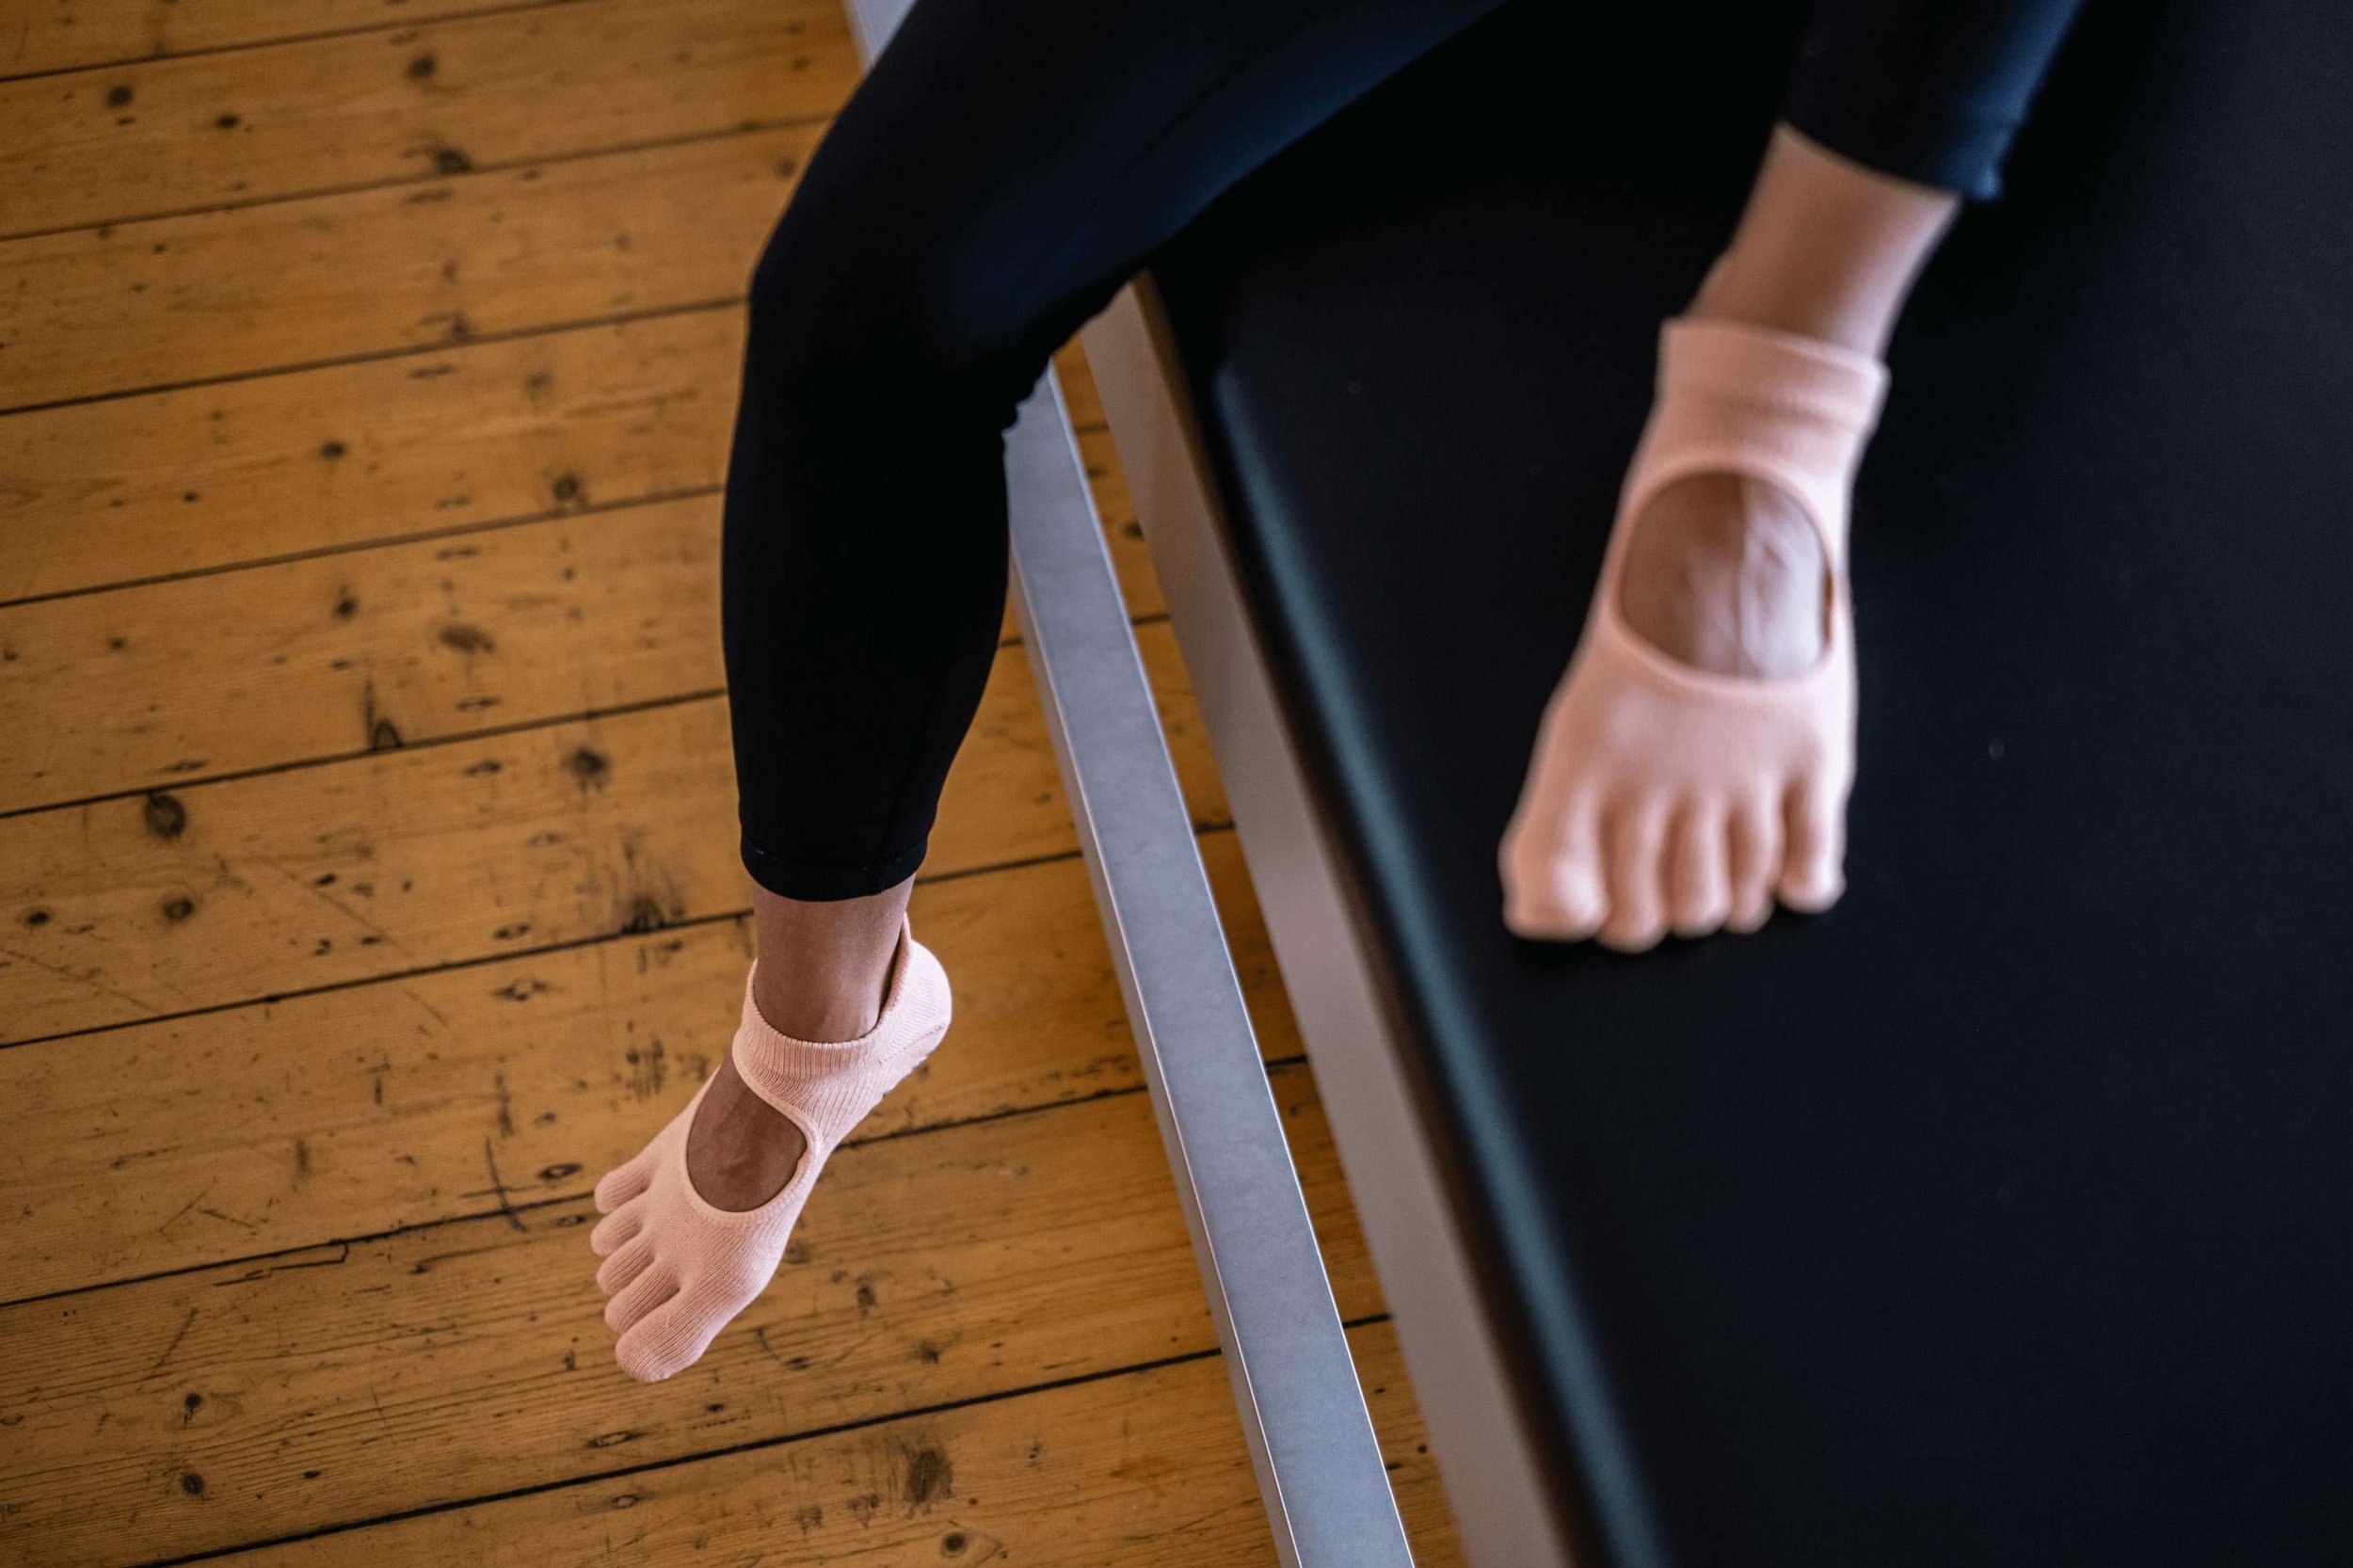 Pilates/Yoga Grip Socks - OPEN TOE — COZY - Cotton Knee High